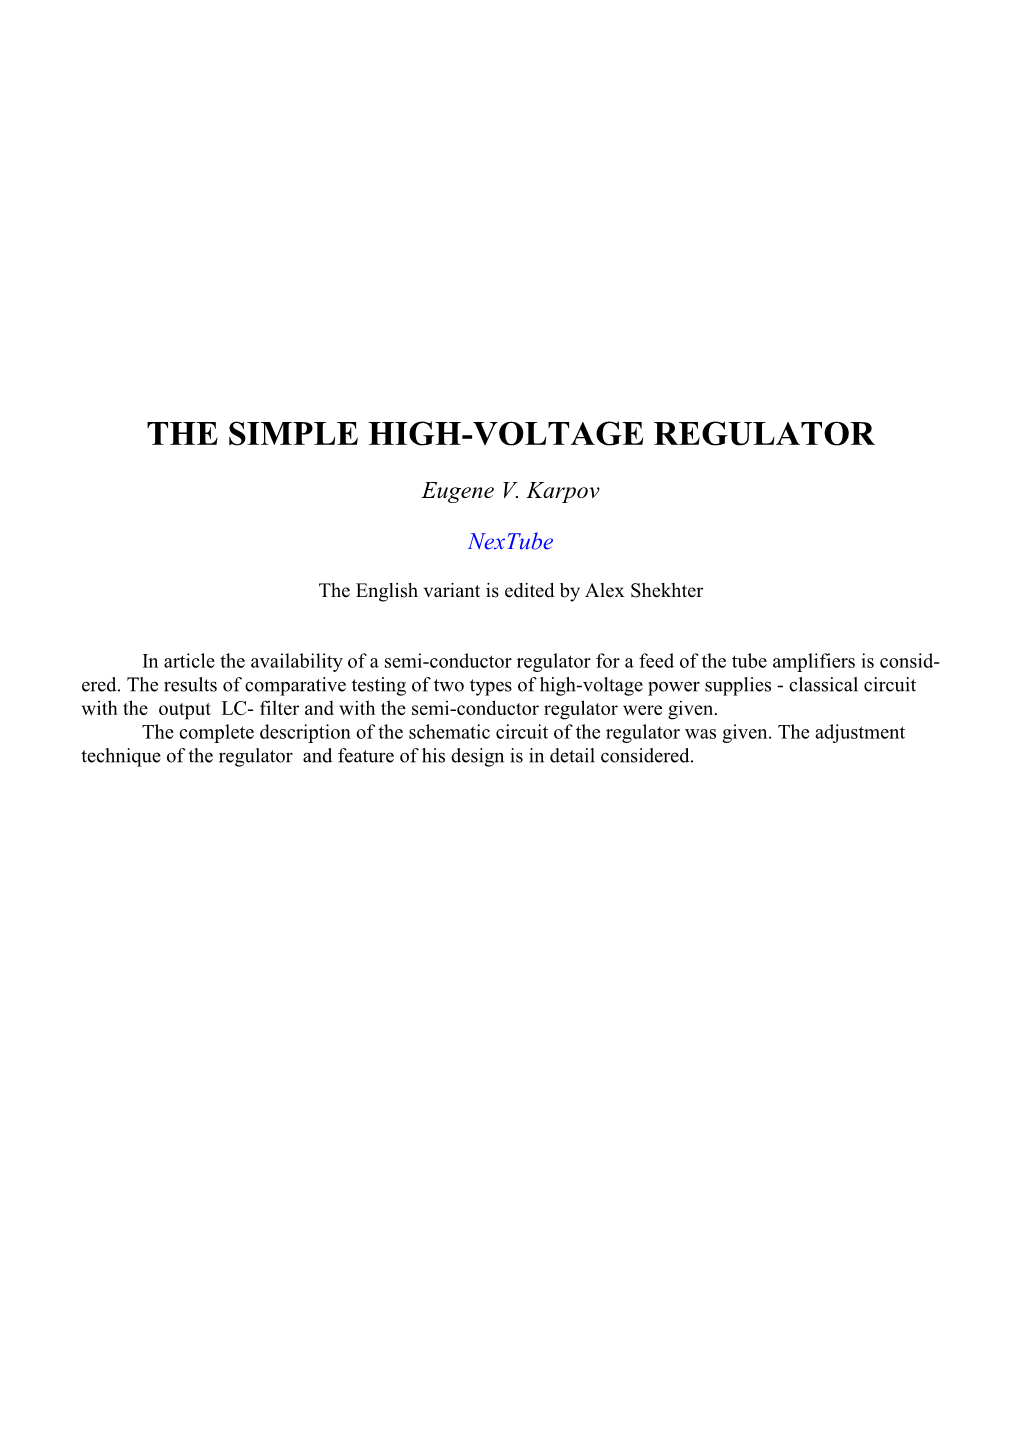 The Simple High-Voltage Regulator